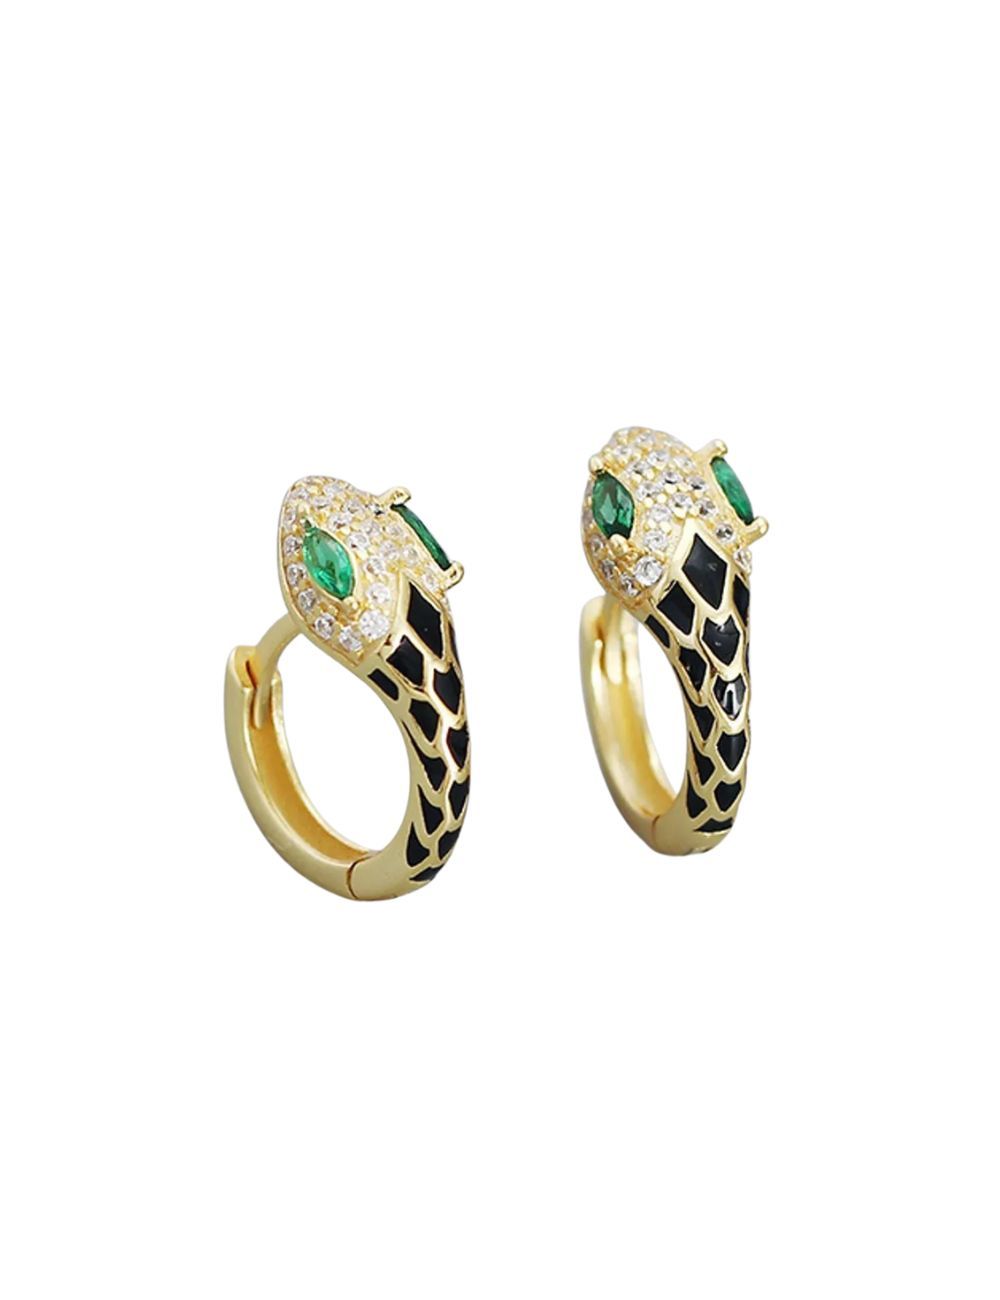 Rainbow Milia earrings - Gold plated